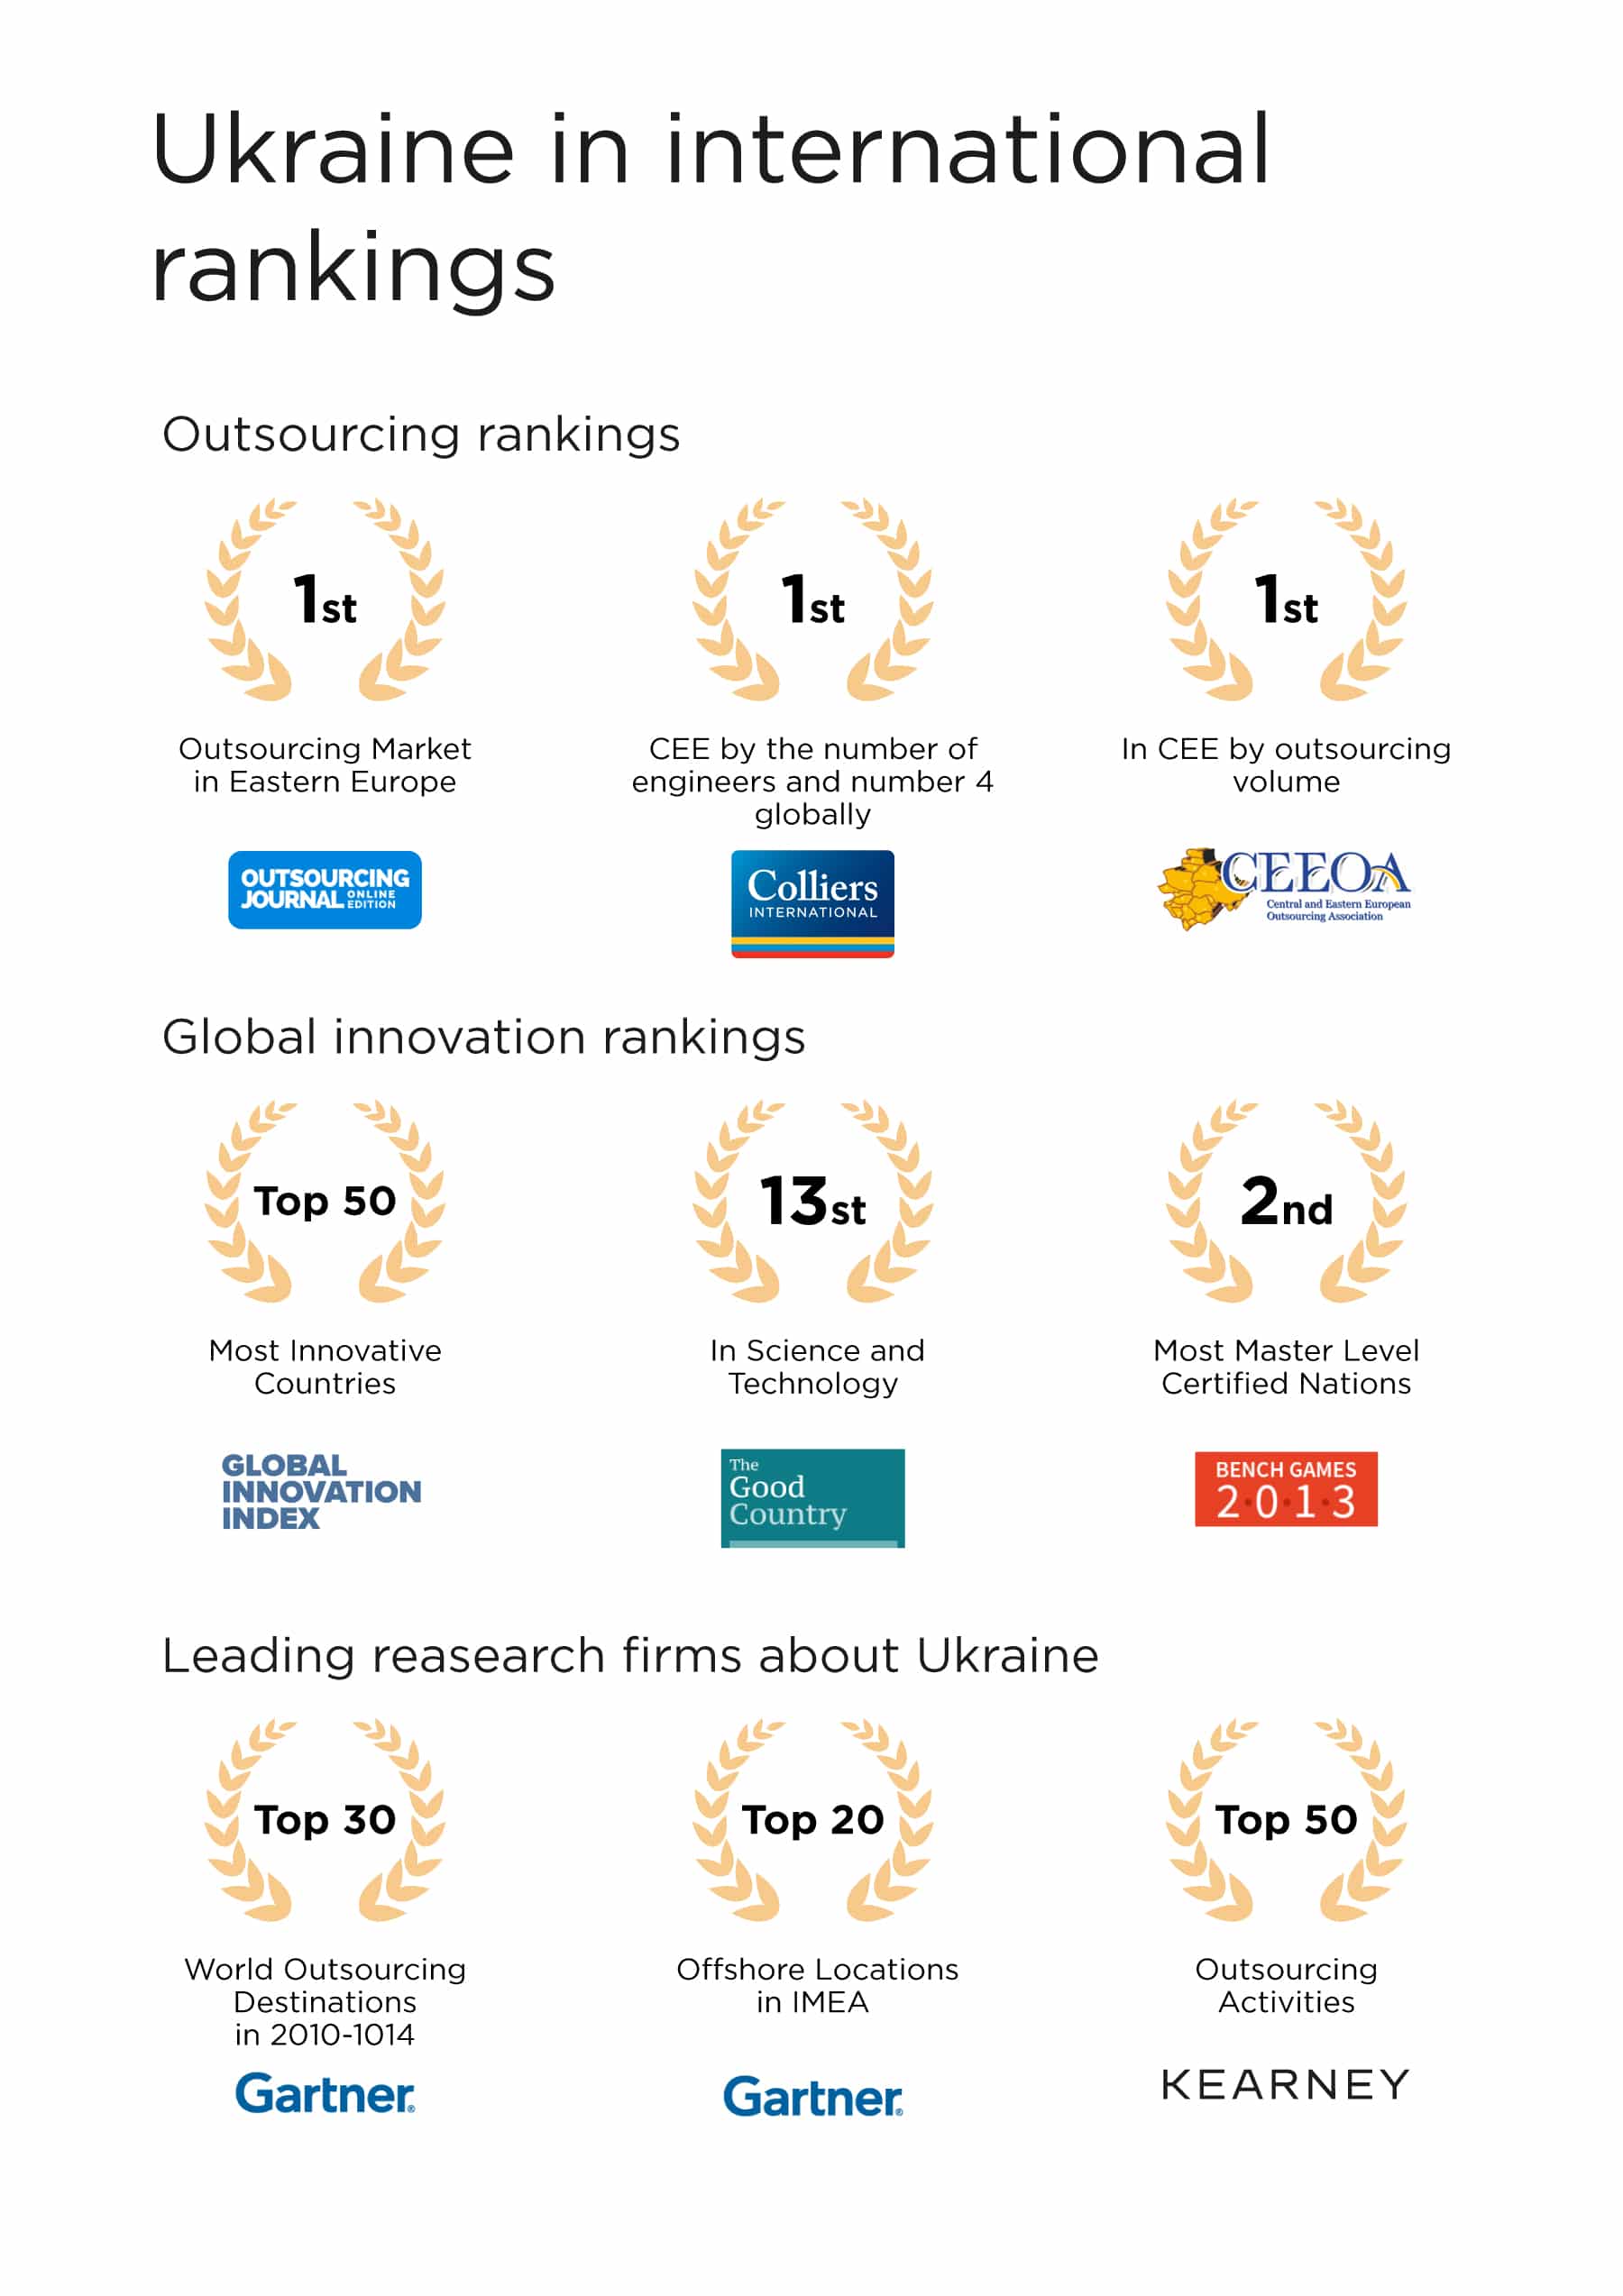 Ukraine’s outsourcing market ranking